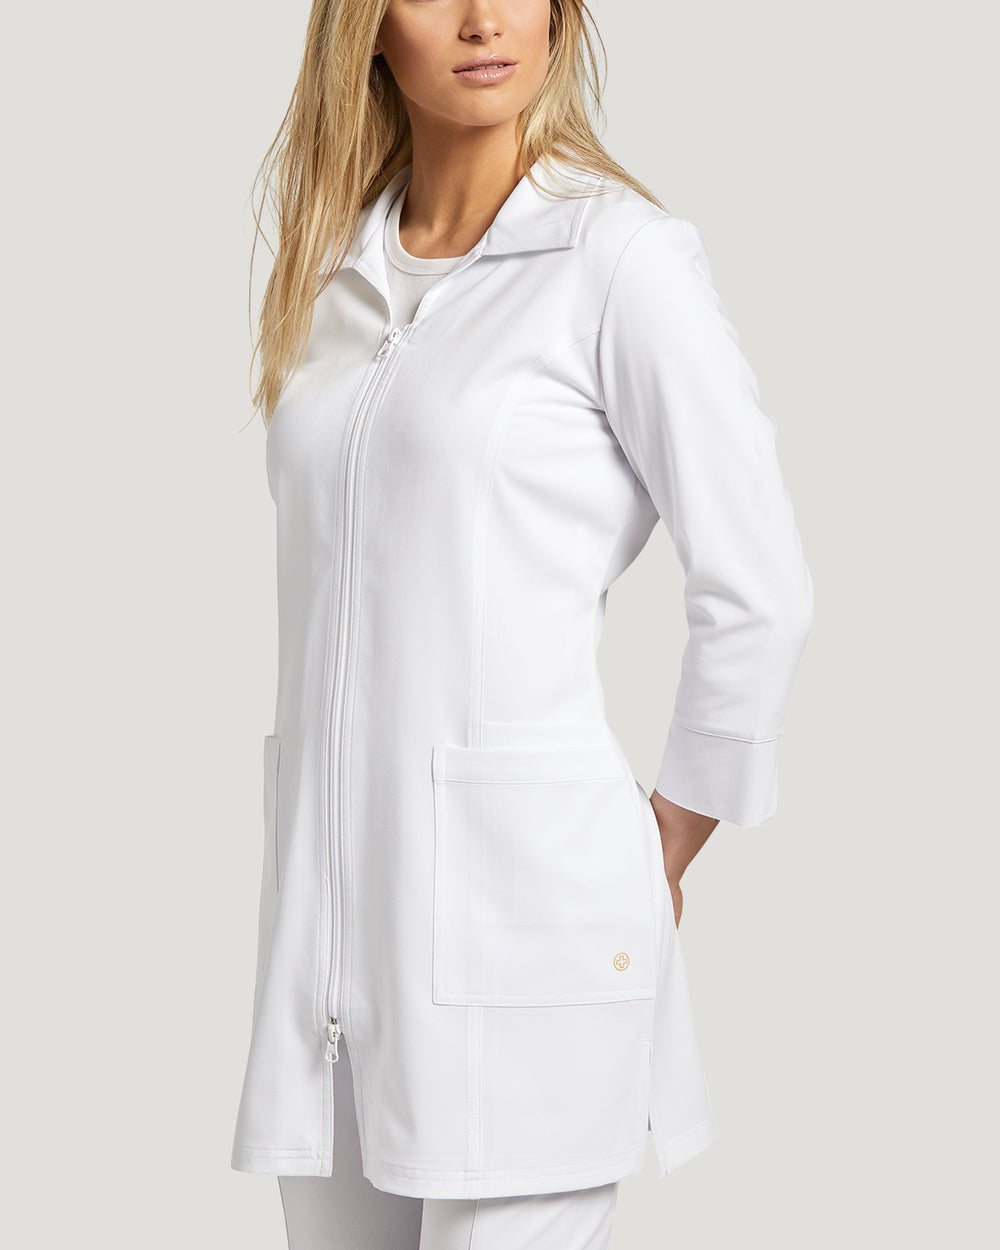 2817 White Cross Marvella Women's Lab coat